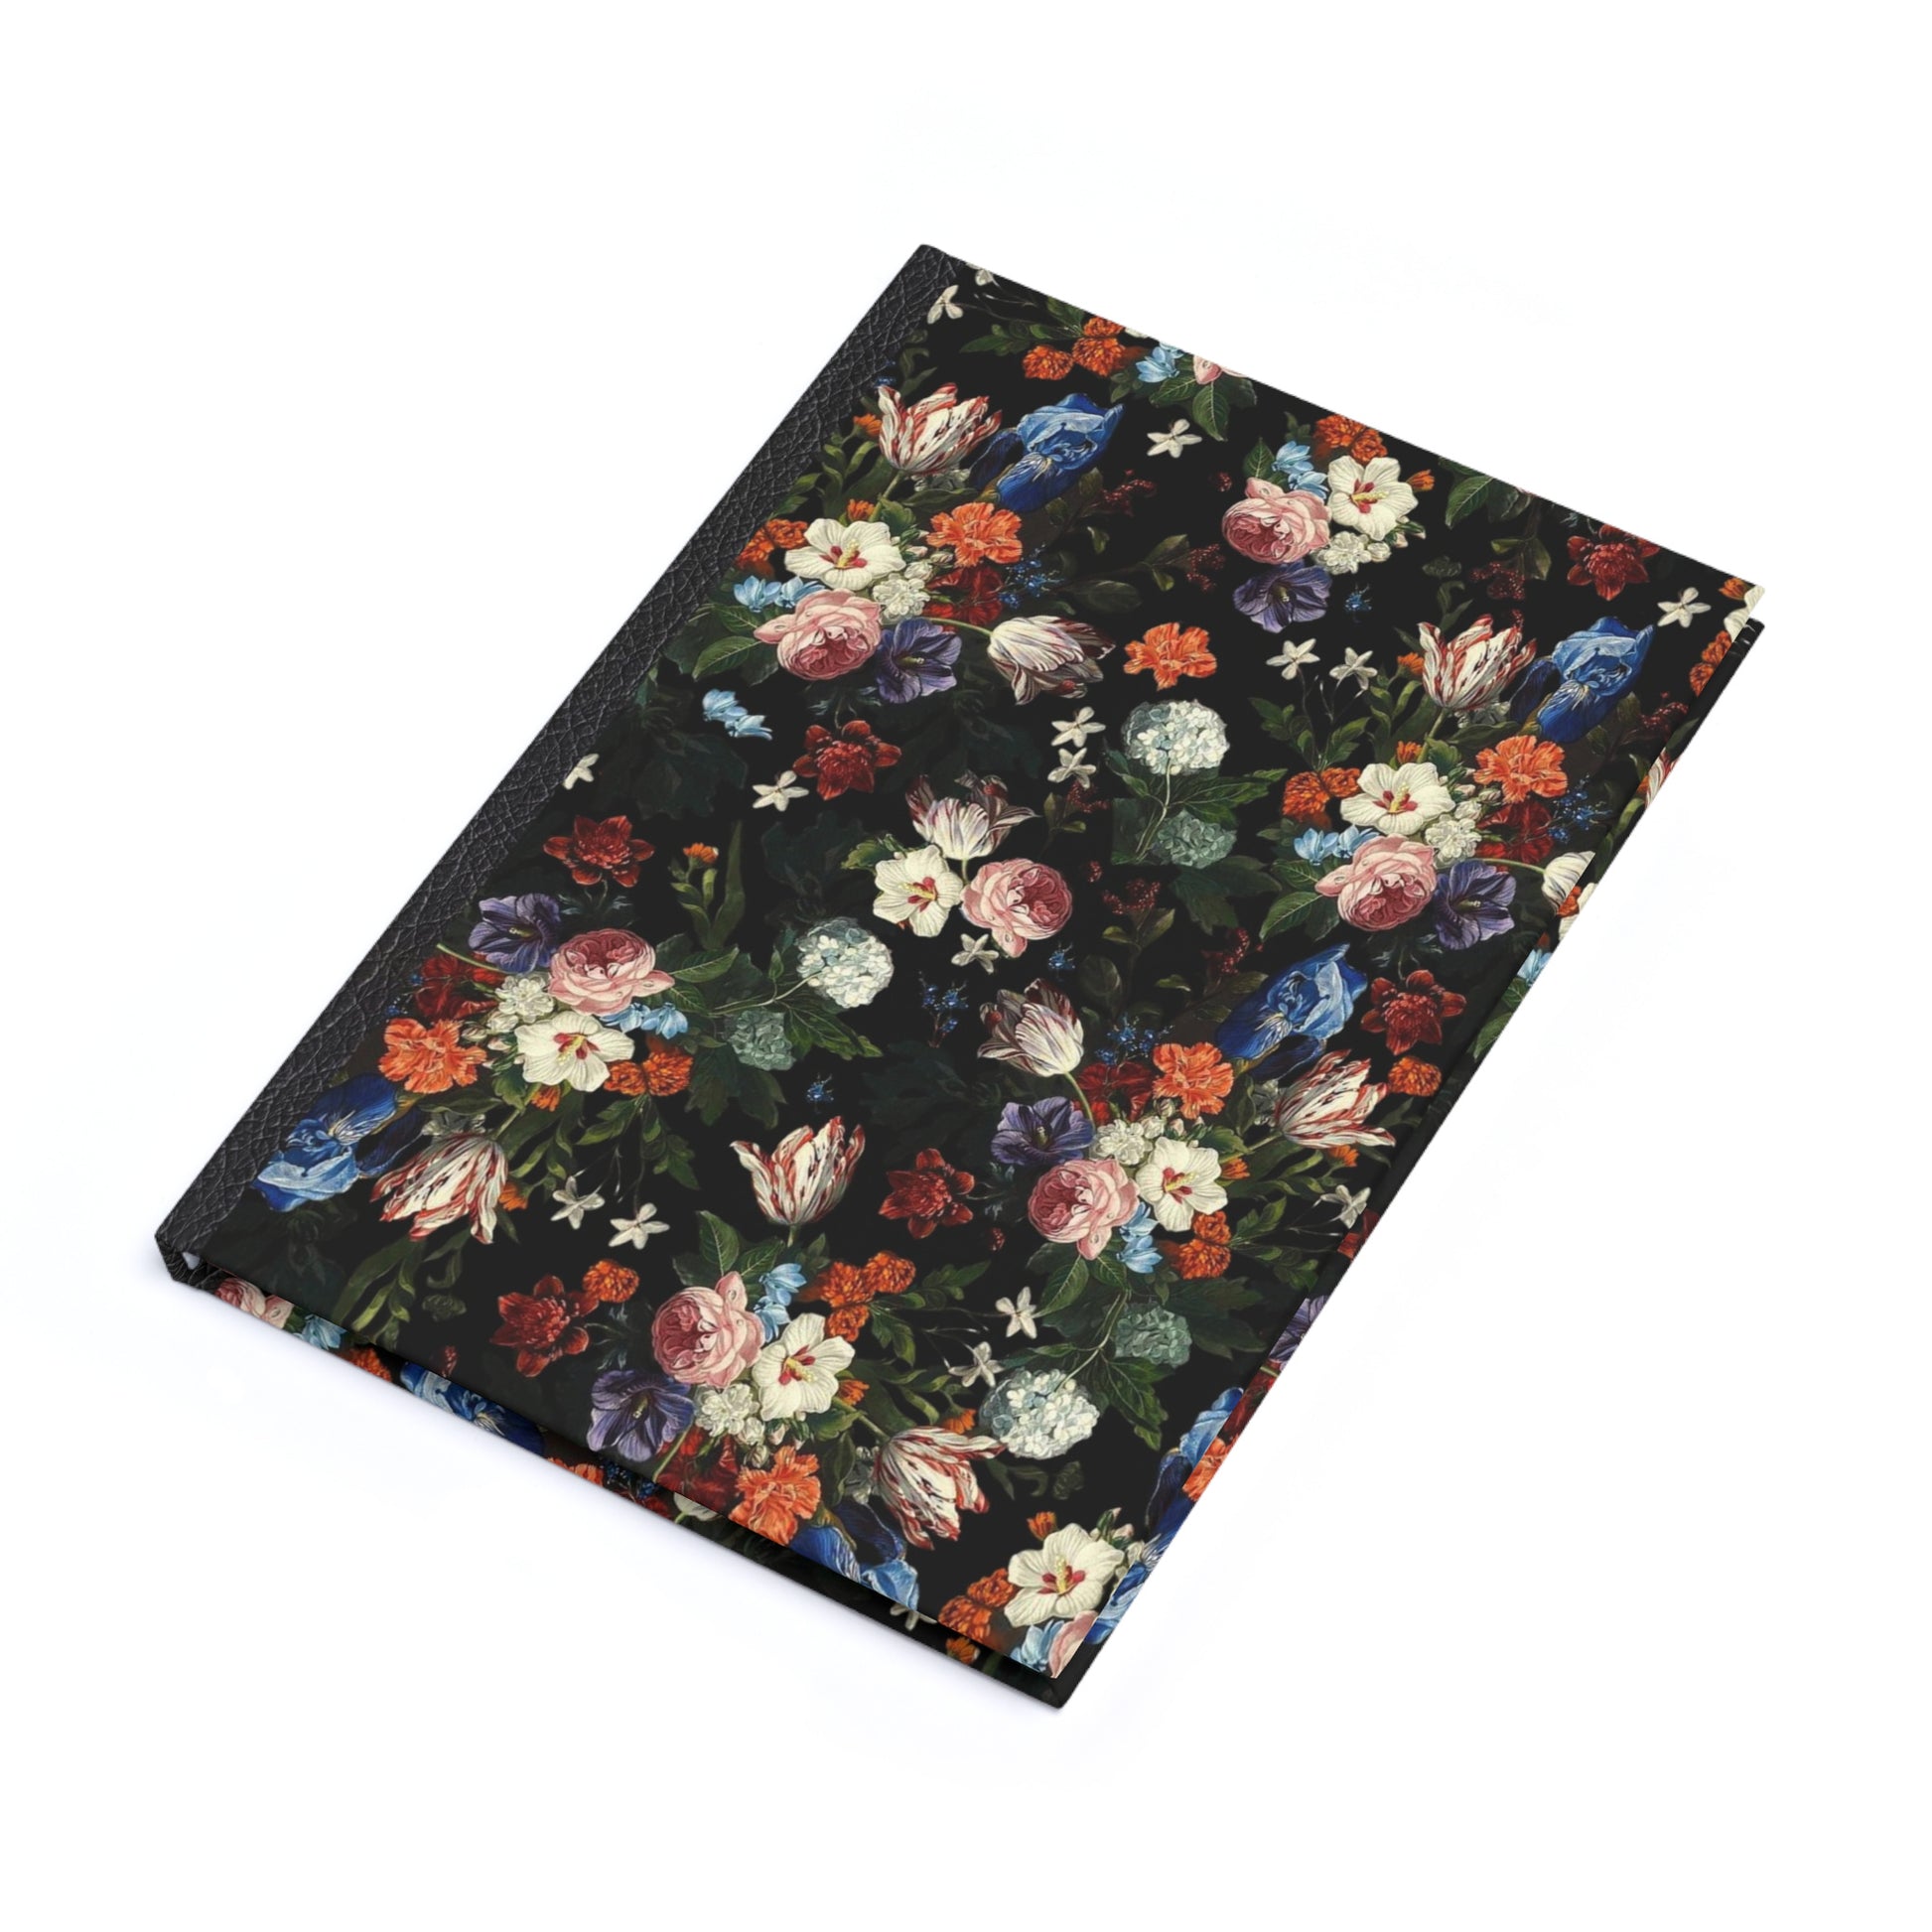 hardcover notebook with dark floral design